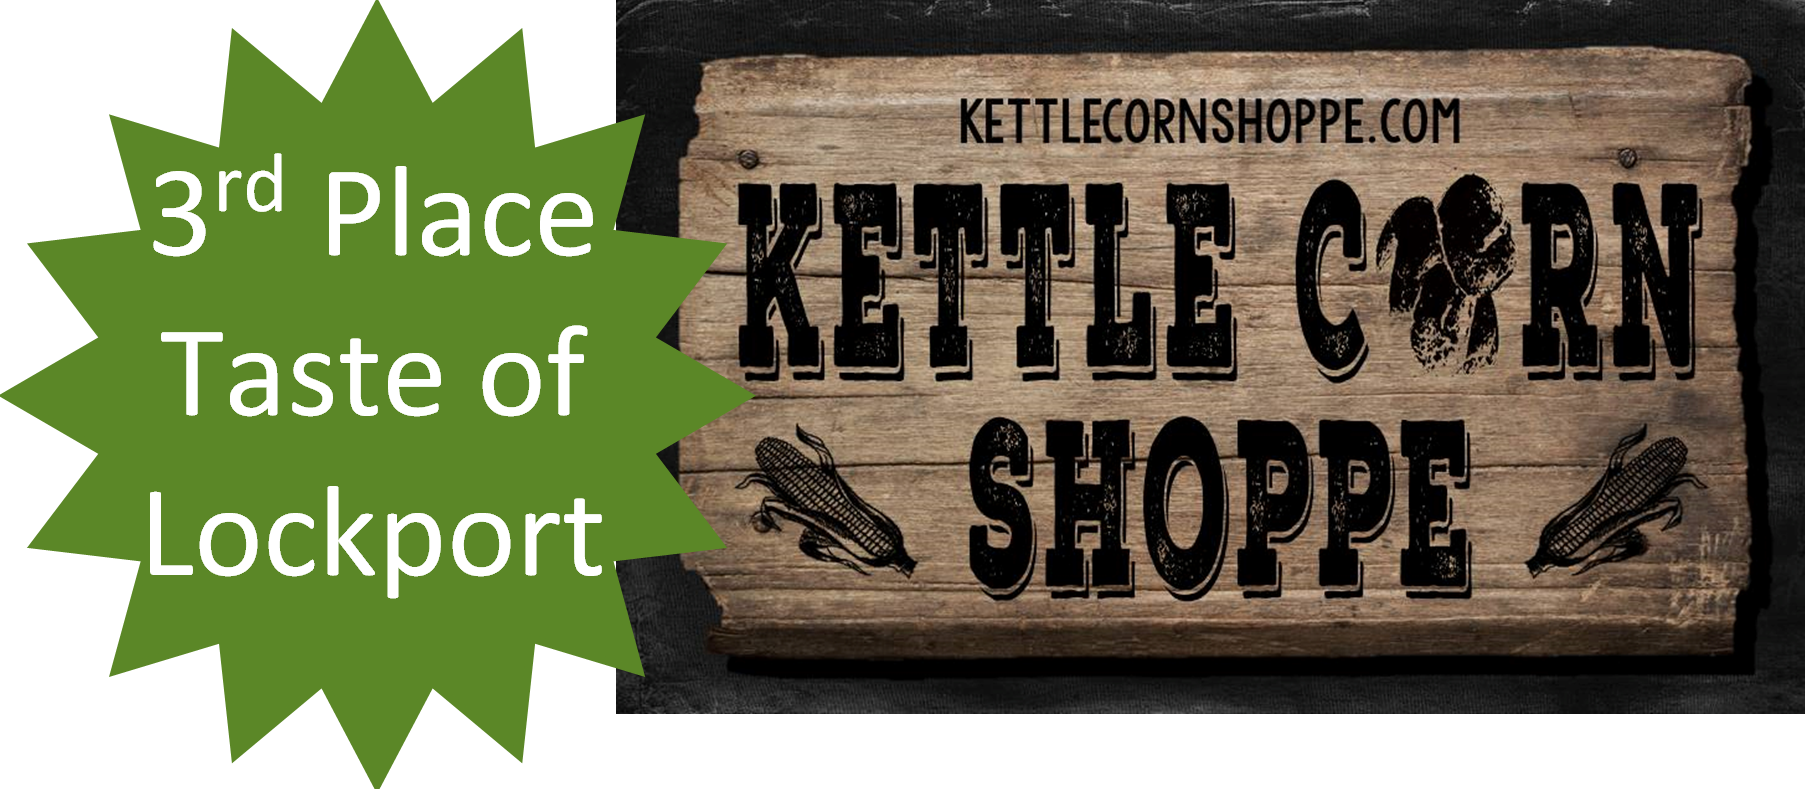 Kettle Corn Shoppe